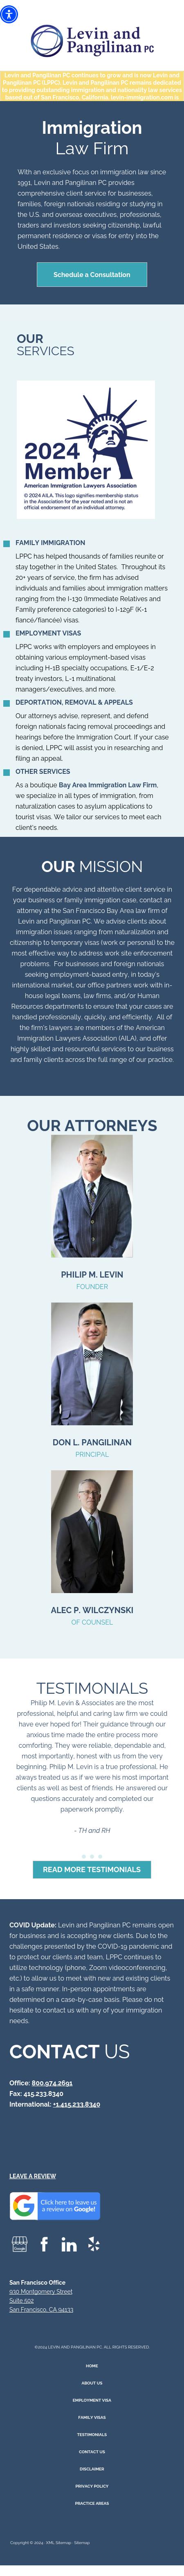 Philip Levin & Associates - San Francisco CA Lawyers